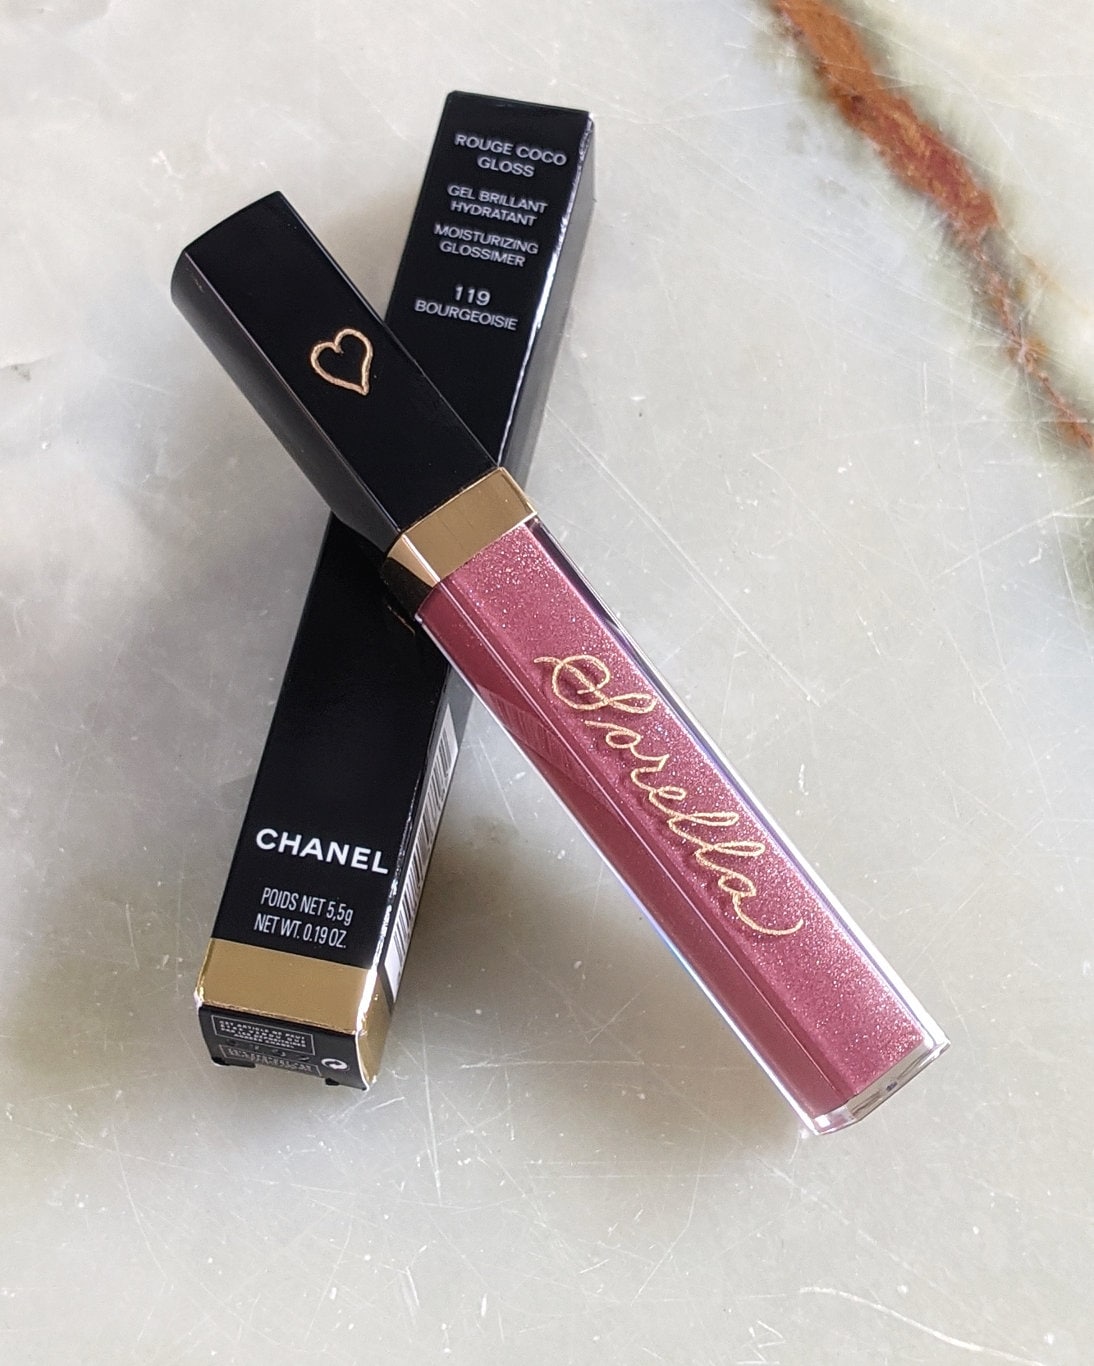 Chanel Rouge Coco Gloss Lip Gloss 119 Bourgeoisie Sample NEW